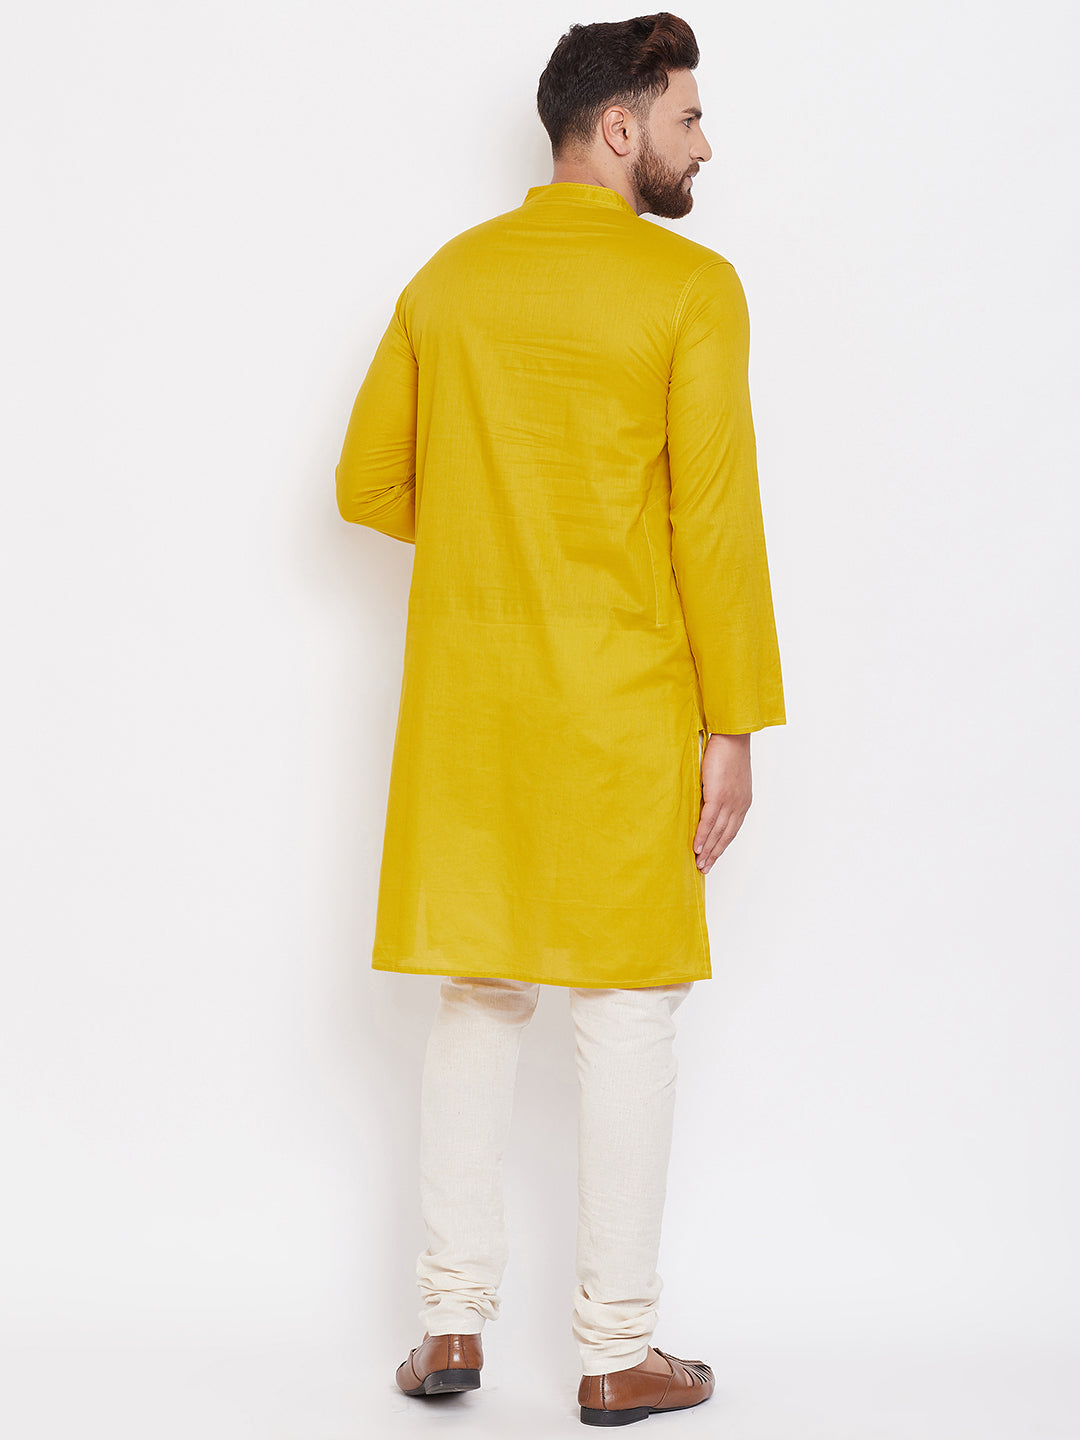 Men's Yellow Cotton Kurta - Even Apparels